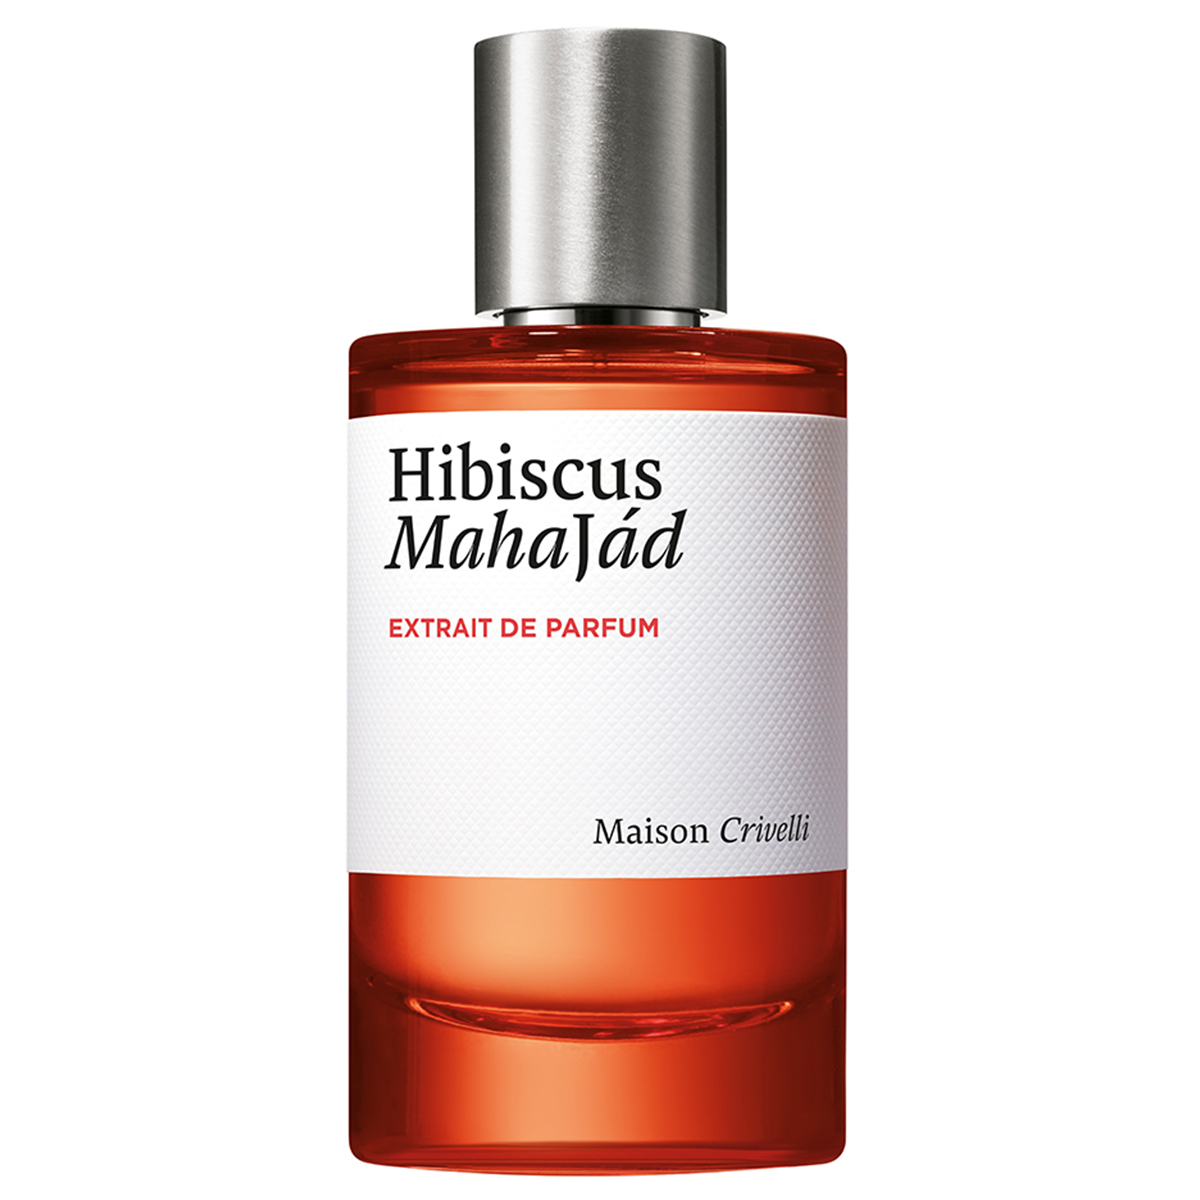 maison crivelli  Hibiscus Mahajad